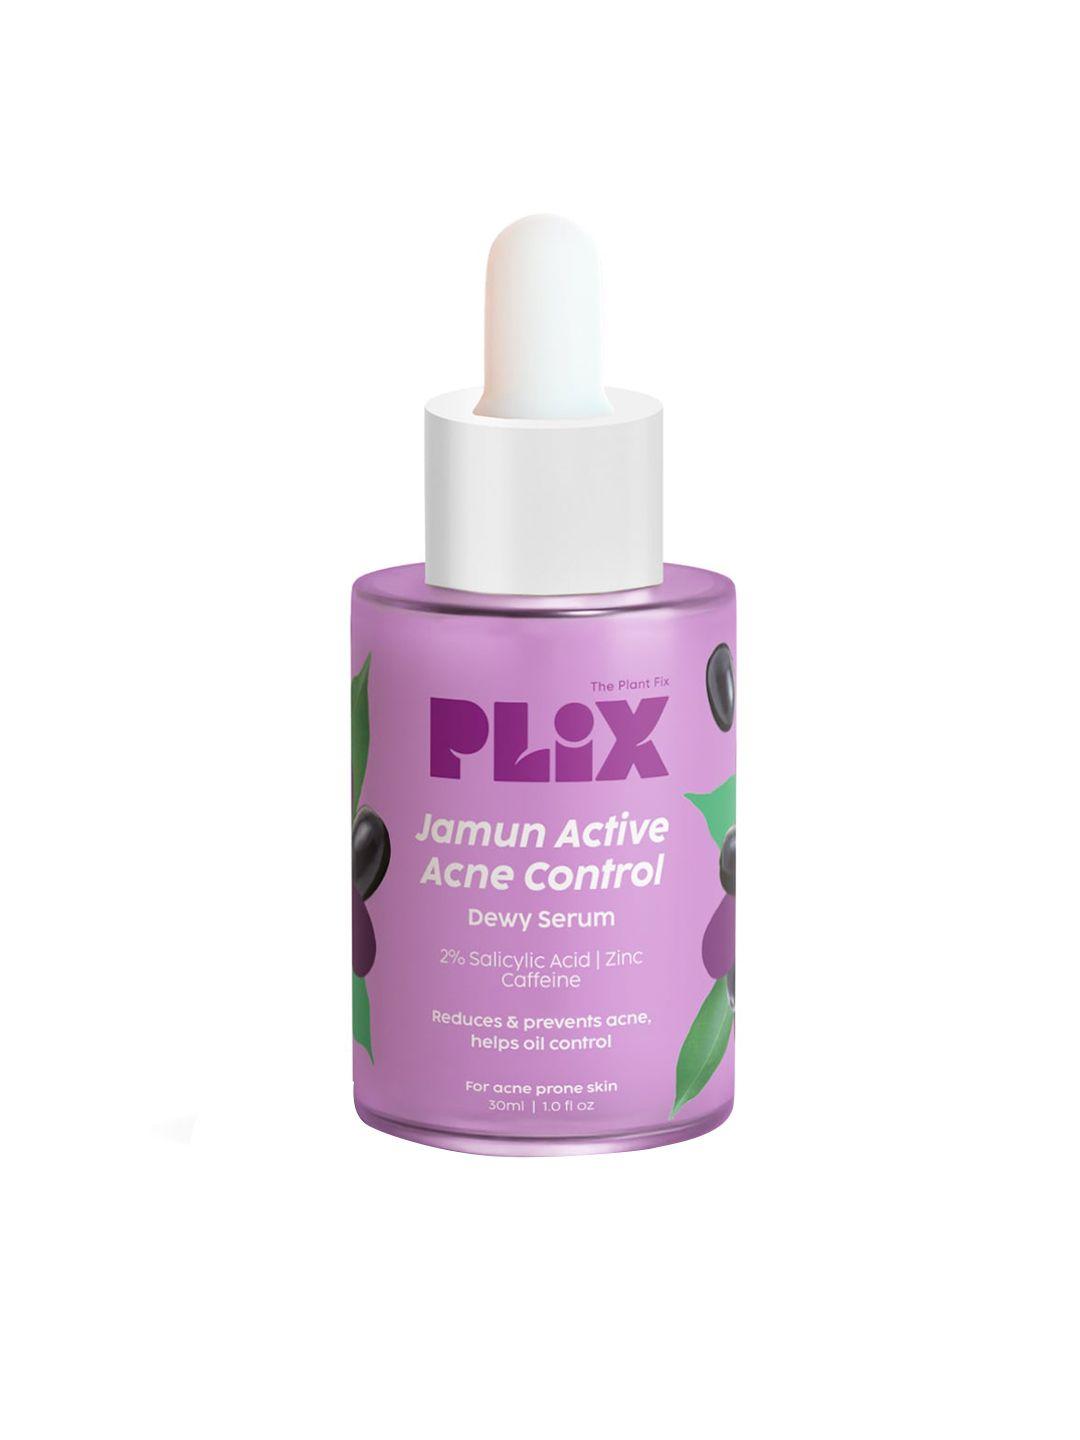 plix the plant fix 2% salicylic acid jamun active acne control dewy serum - 30ml